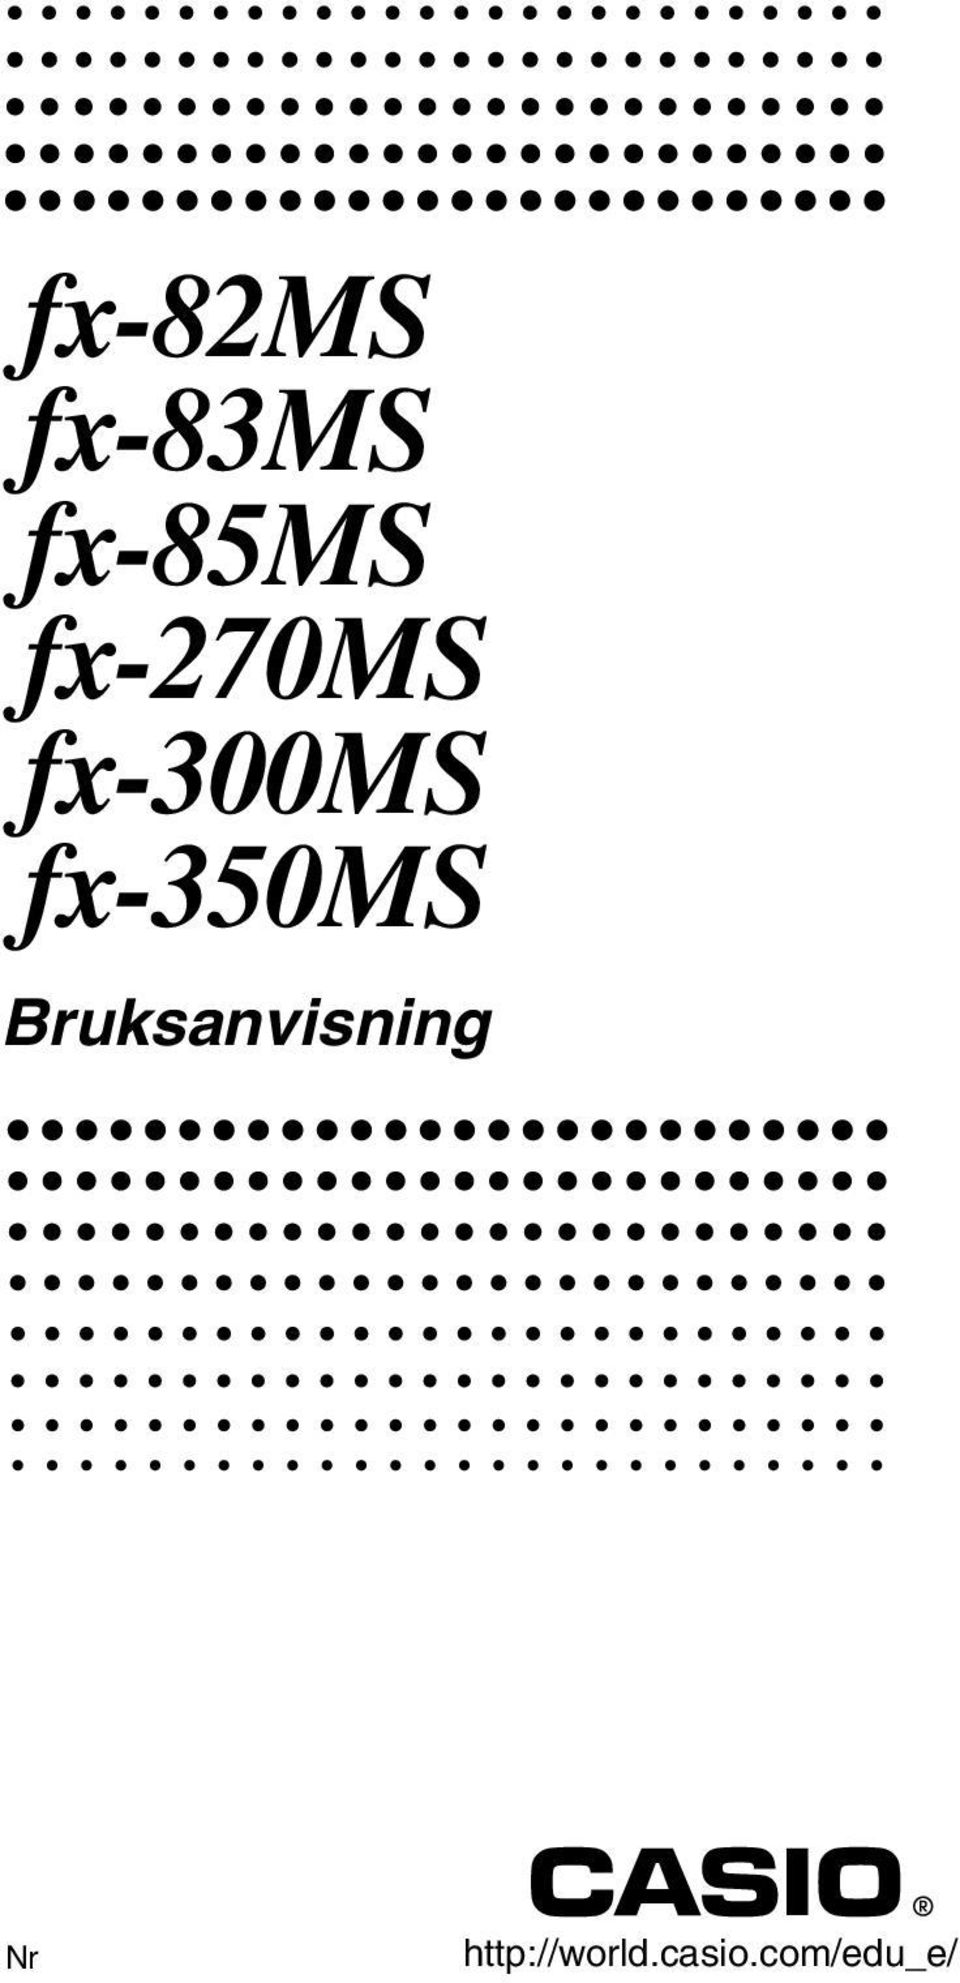 fx-350ms Bruksanvisning